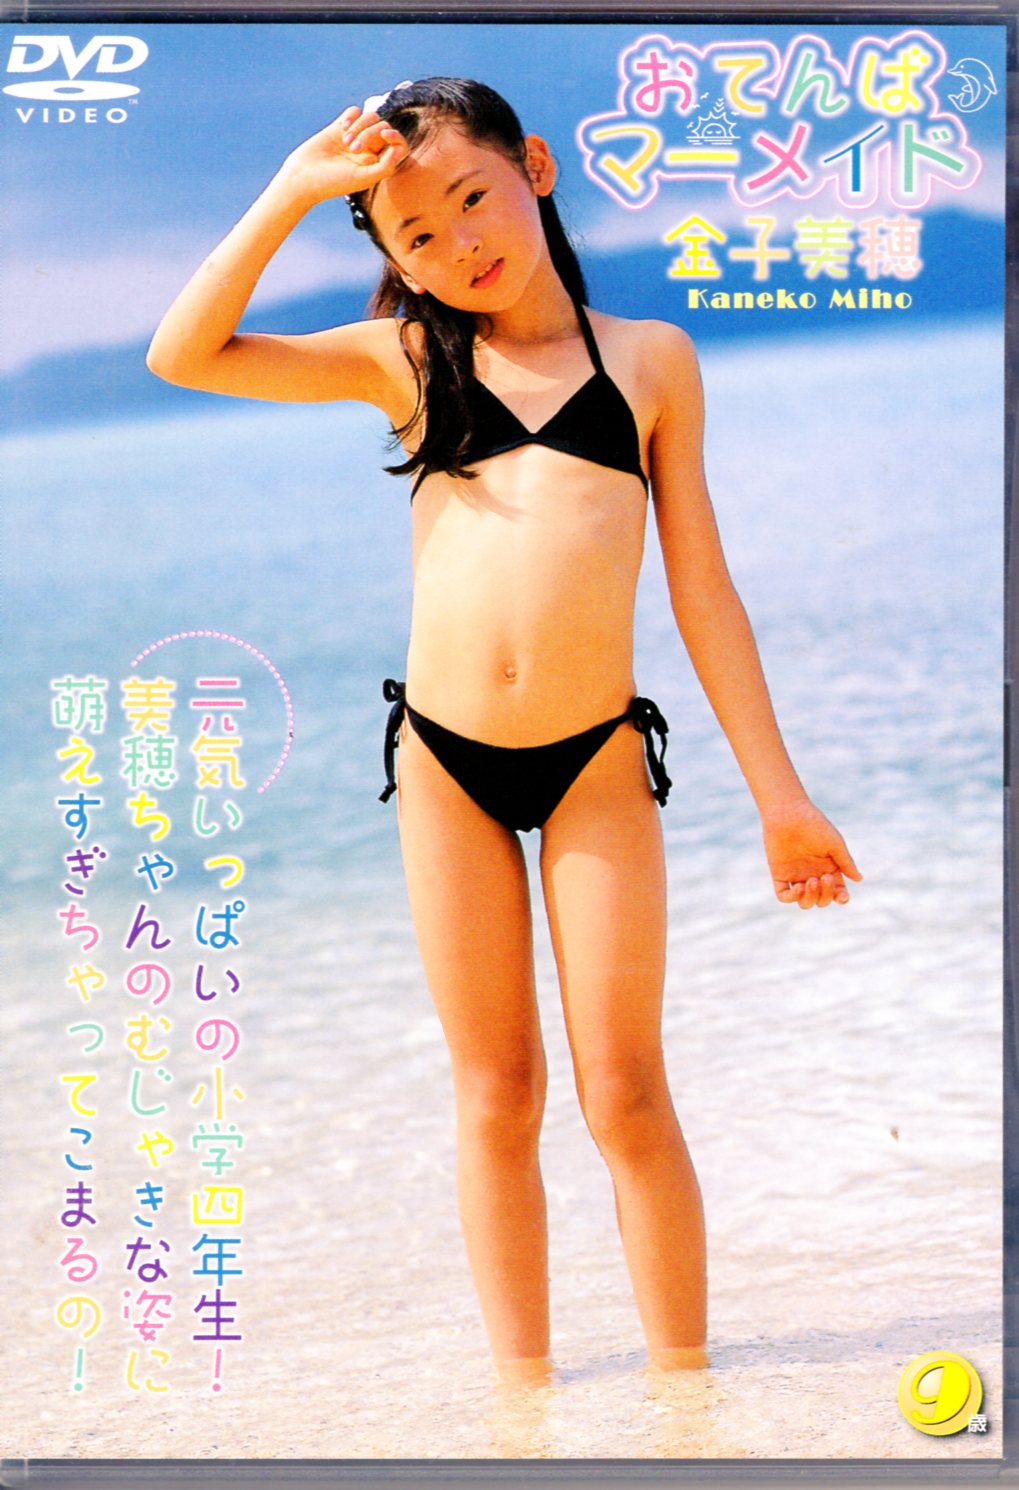 Shinkosha DVD Miho Kaneko Tomboy Mermaid | MANDARAKE 在线商店